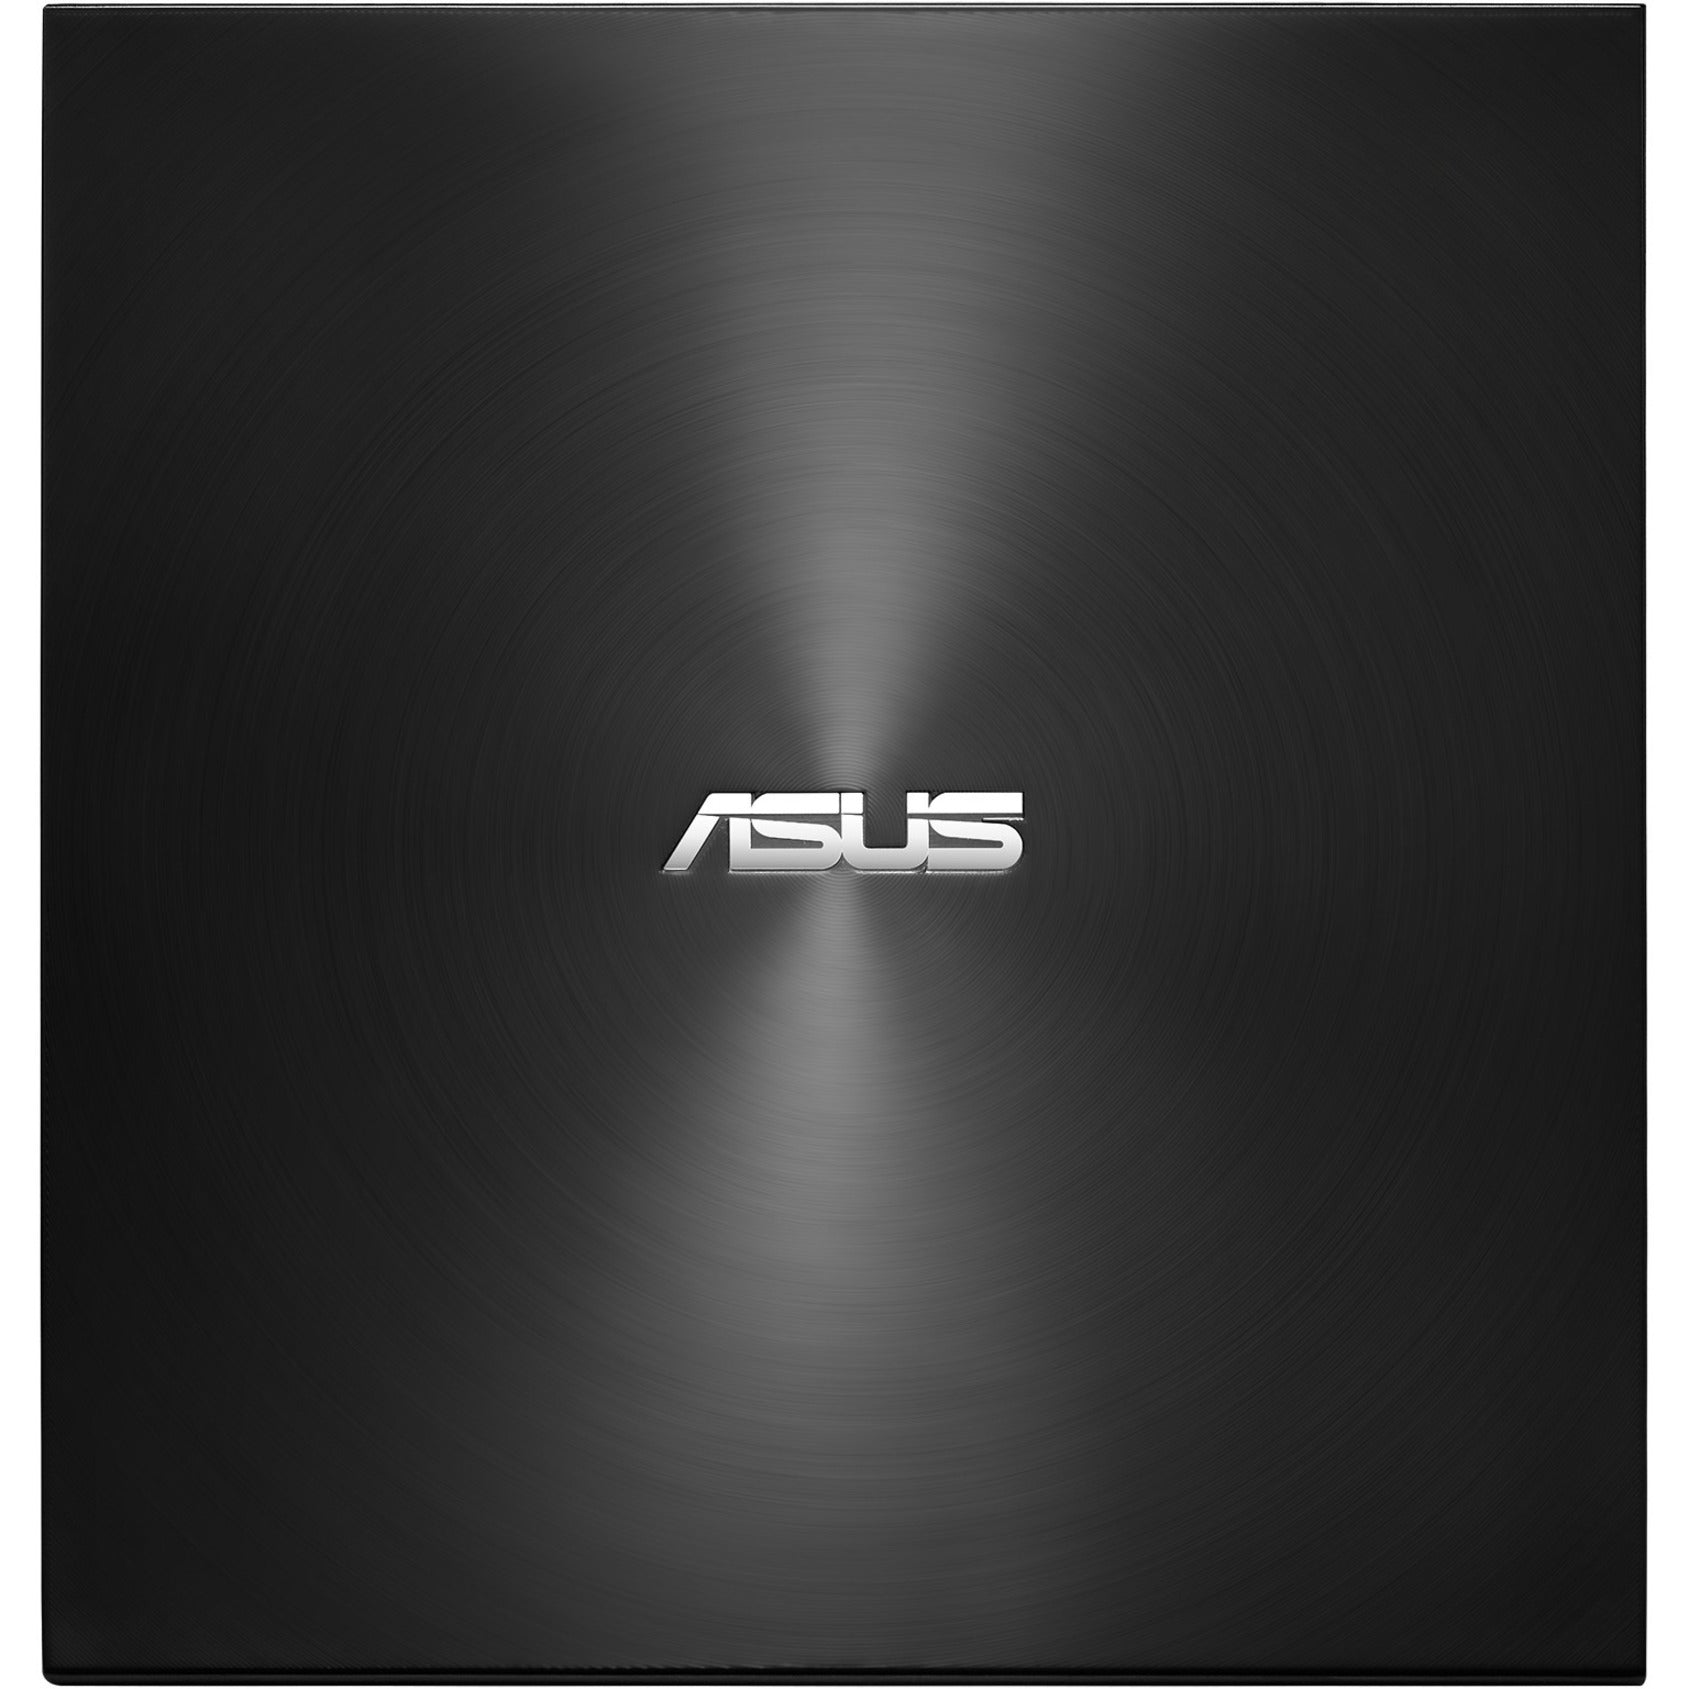 Asus SDRW-08U7M-U/BLK/G/AS External Ultra-slim DVD Writer with M-Disc Support, USB 2.0, Black